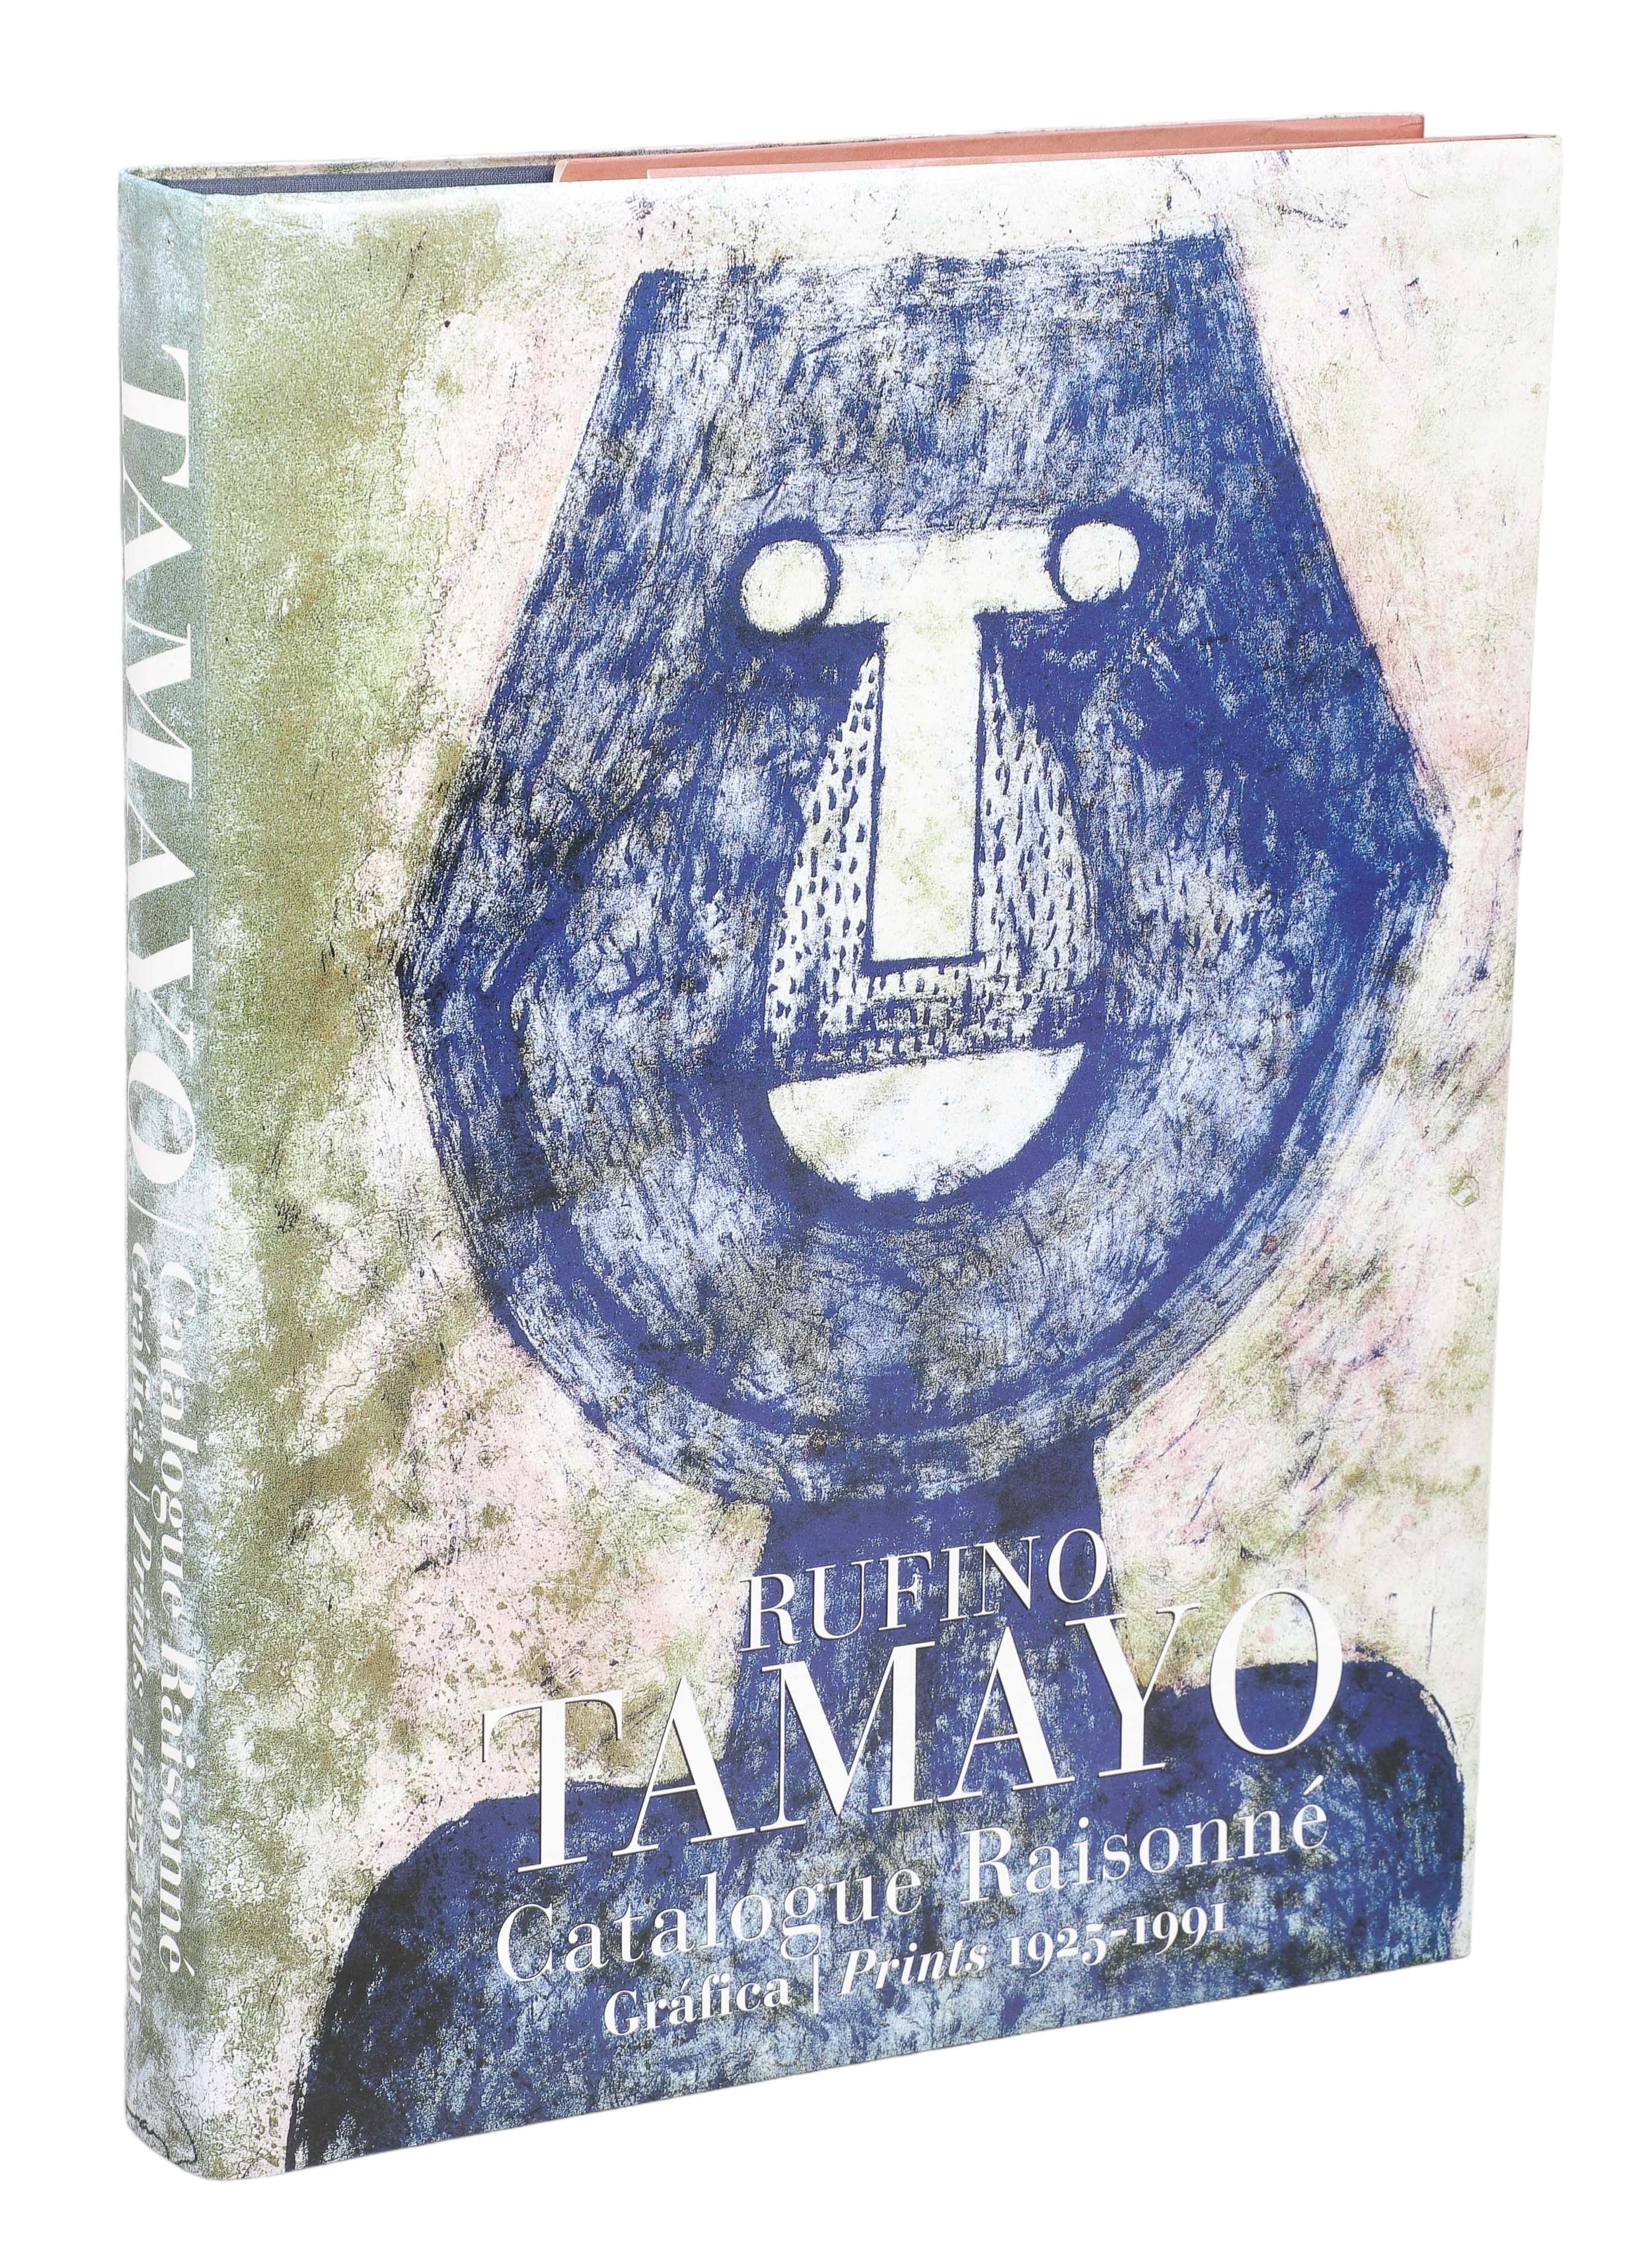 A copy of Rufino Tamayo Catalogue 2e1ace